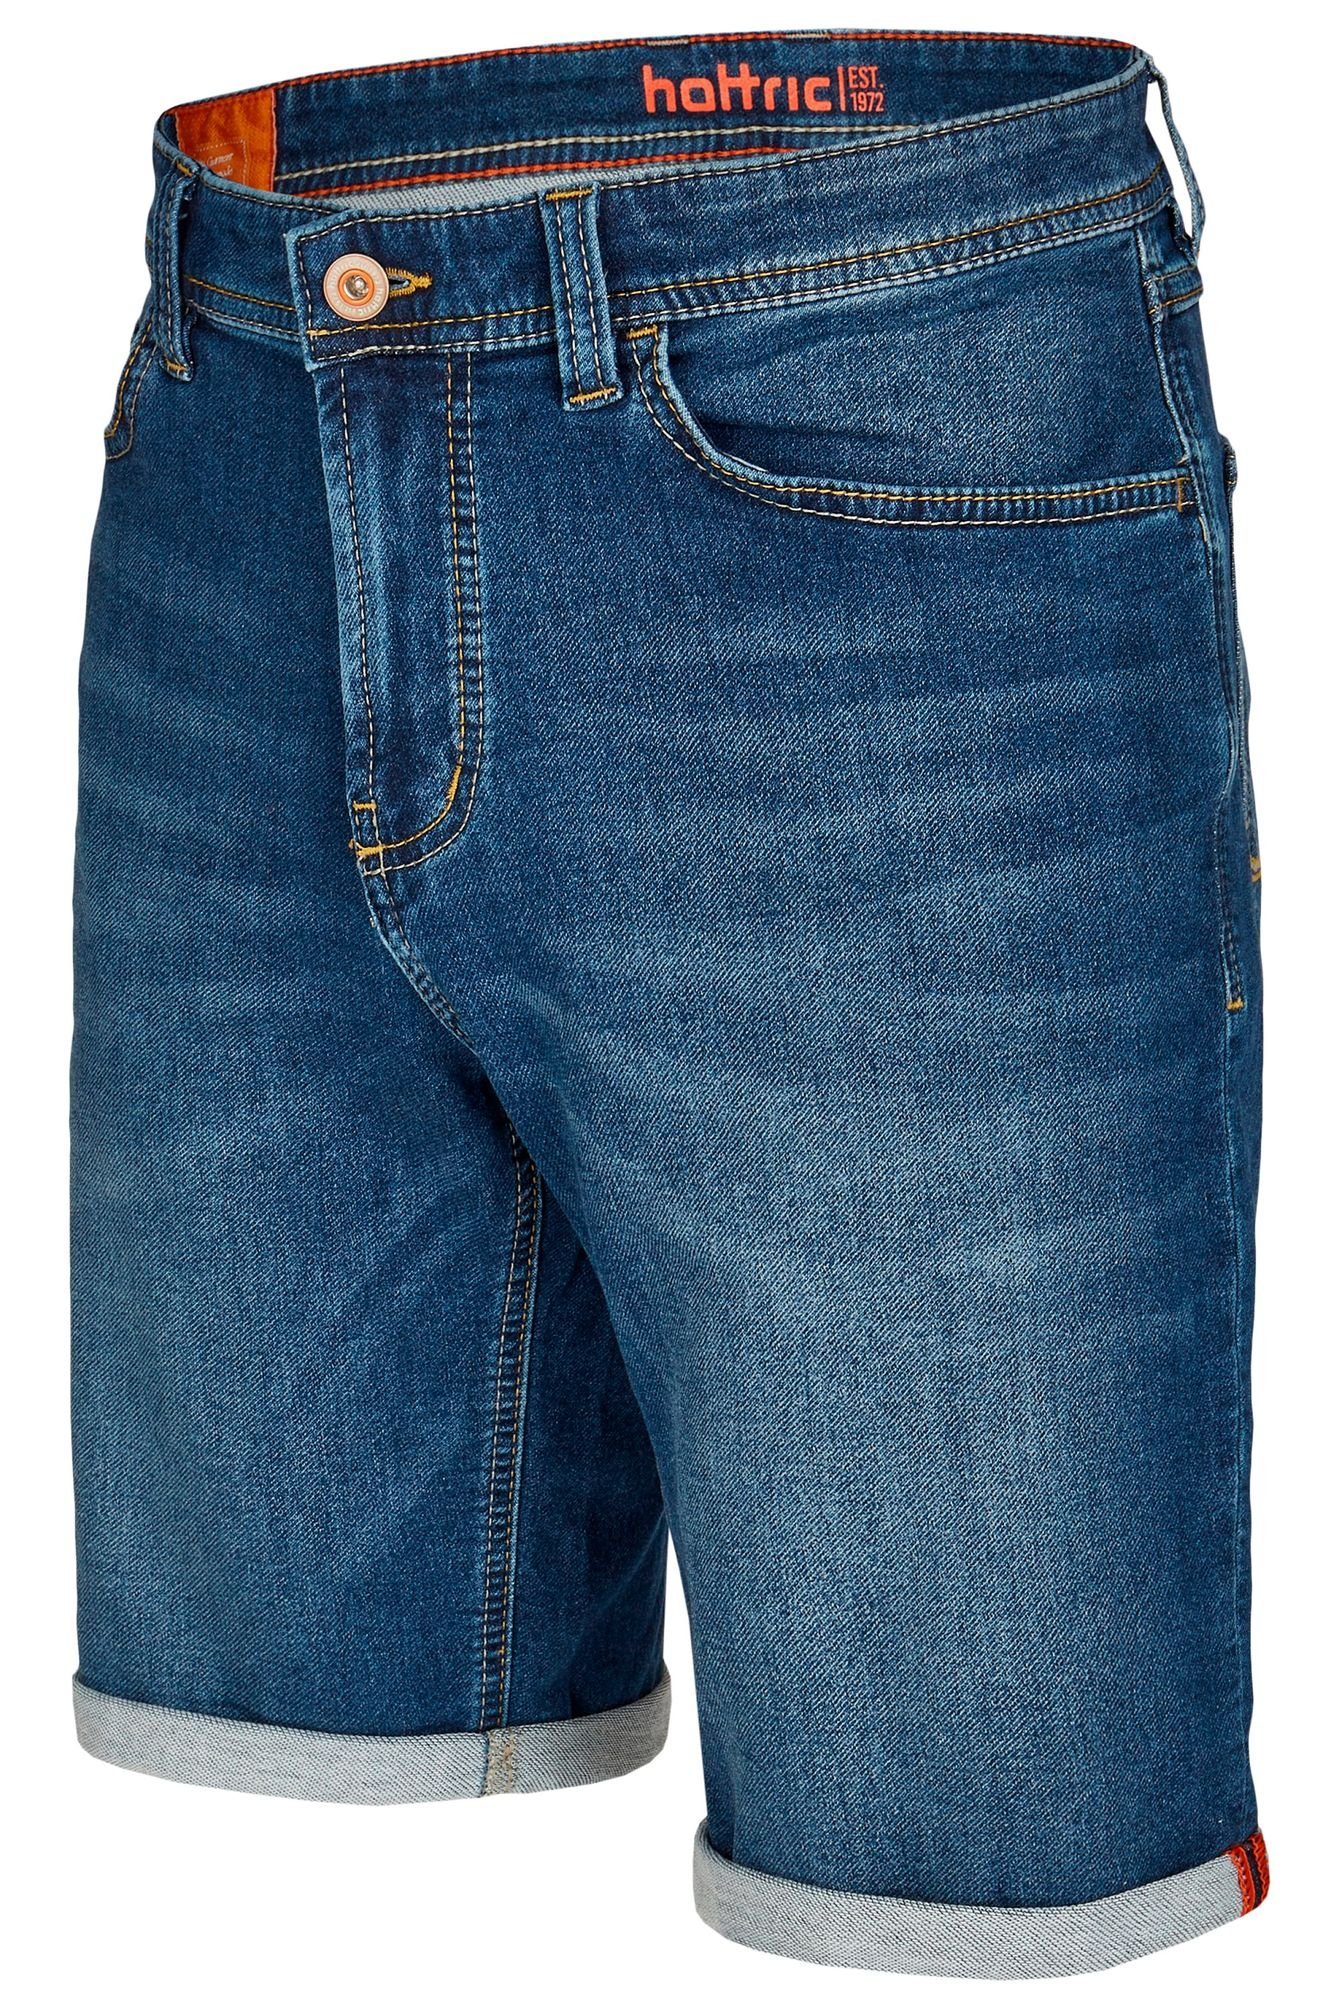 698835-7712 Hattric blue Shorts (45)